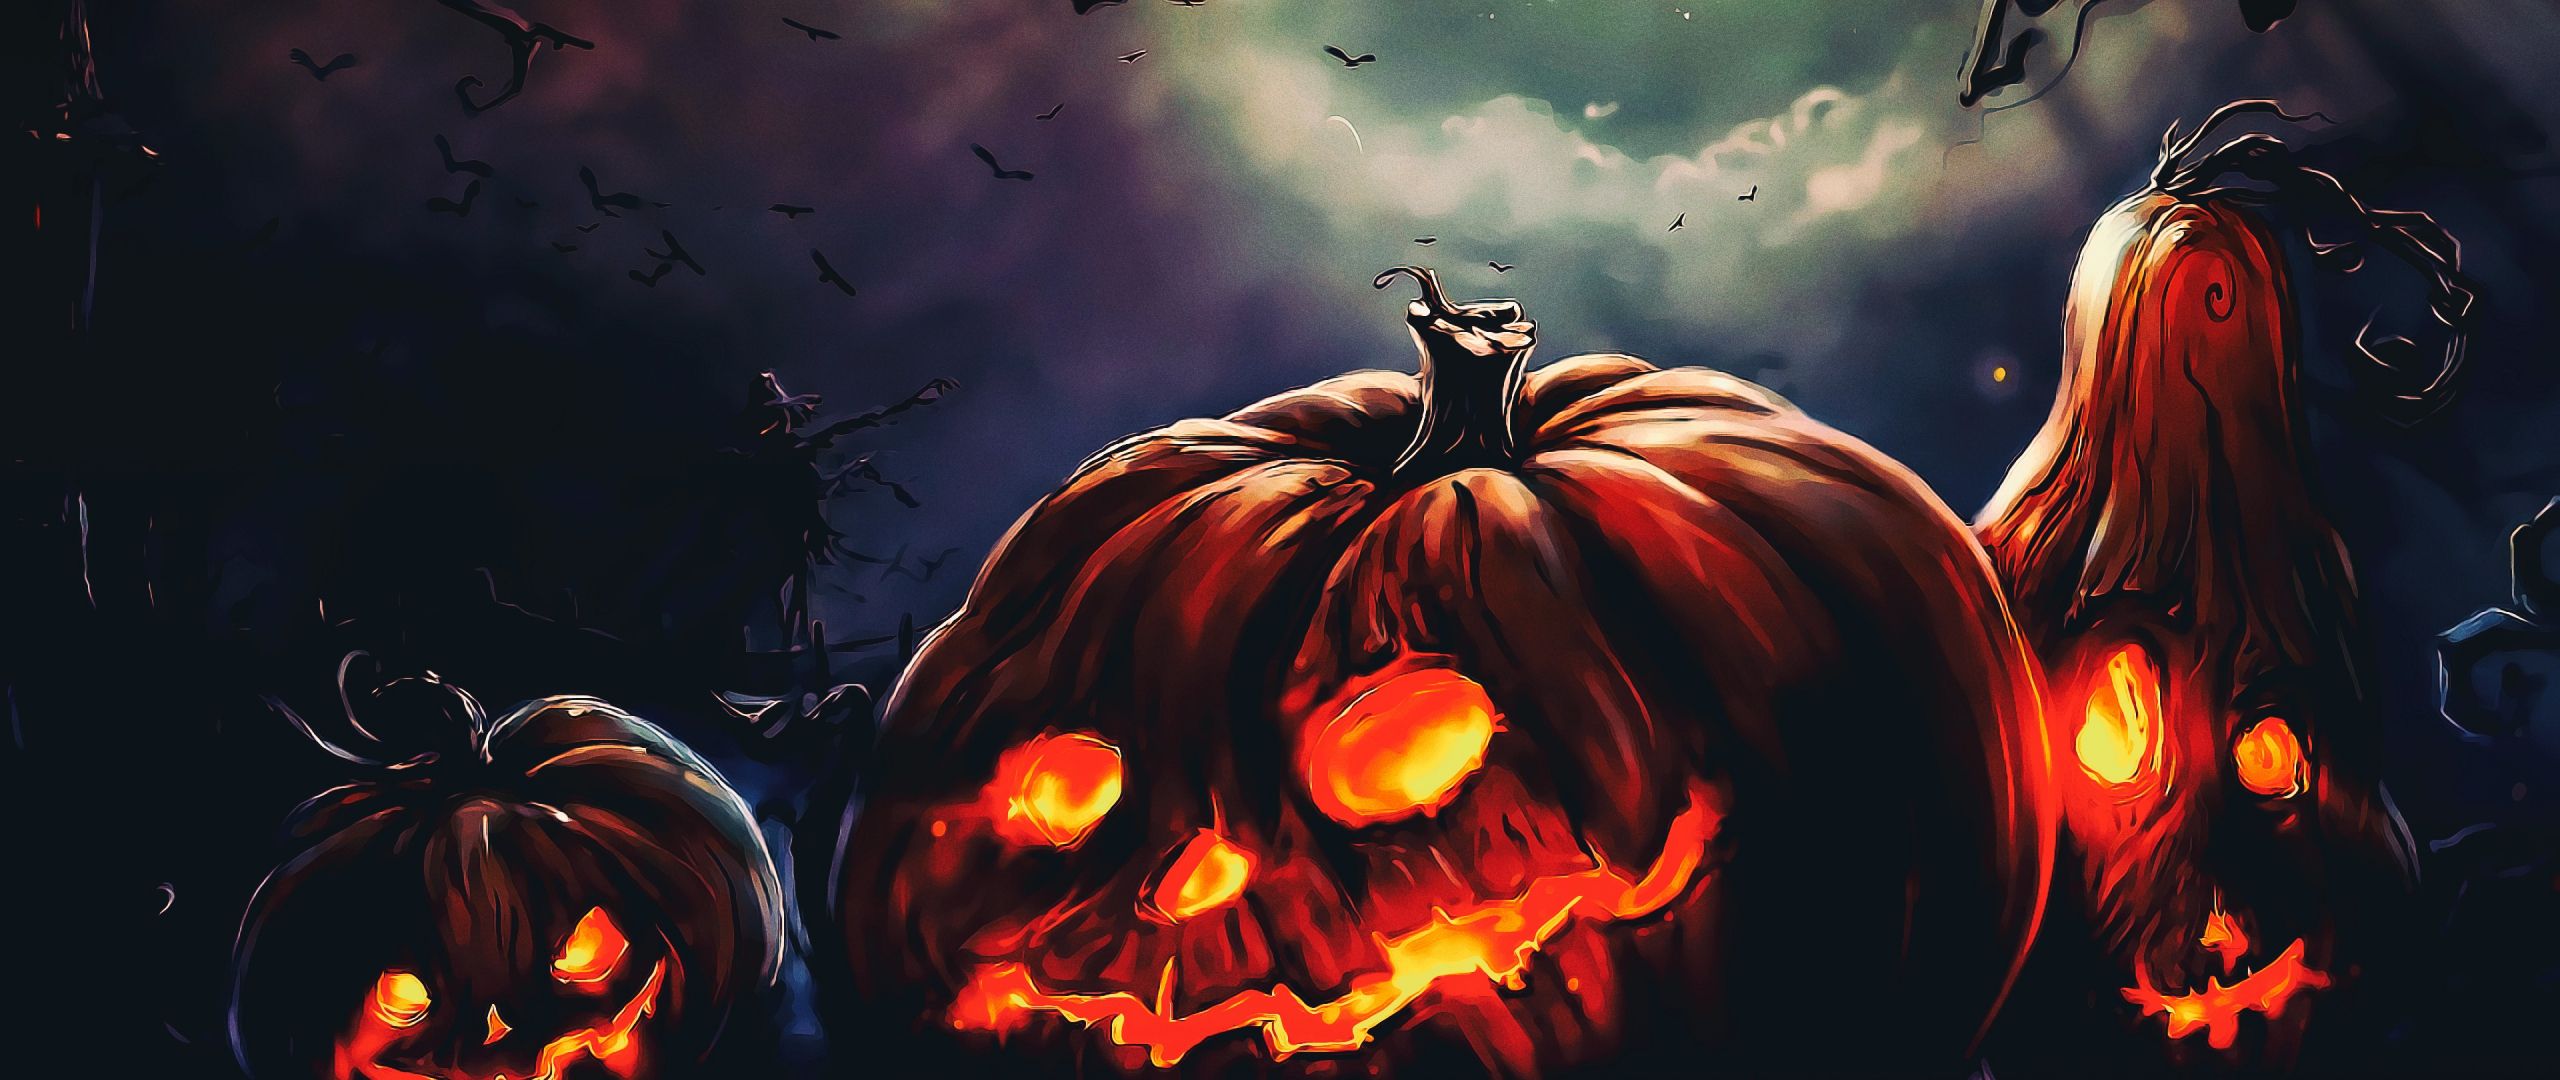 Desktop Wallpaper Halloween, Pumpkin, Scary Night, Fantasy Art, HD Image, Picture, Background, P 9e1m